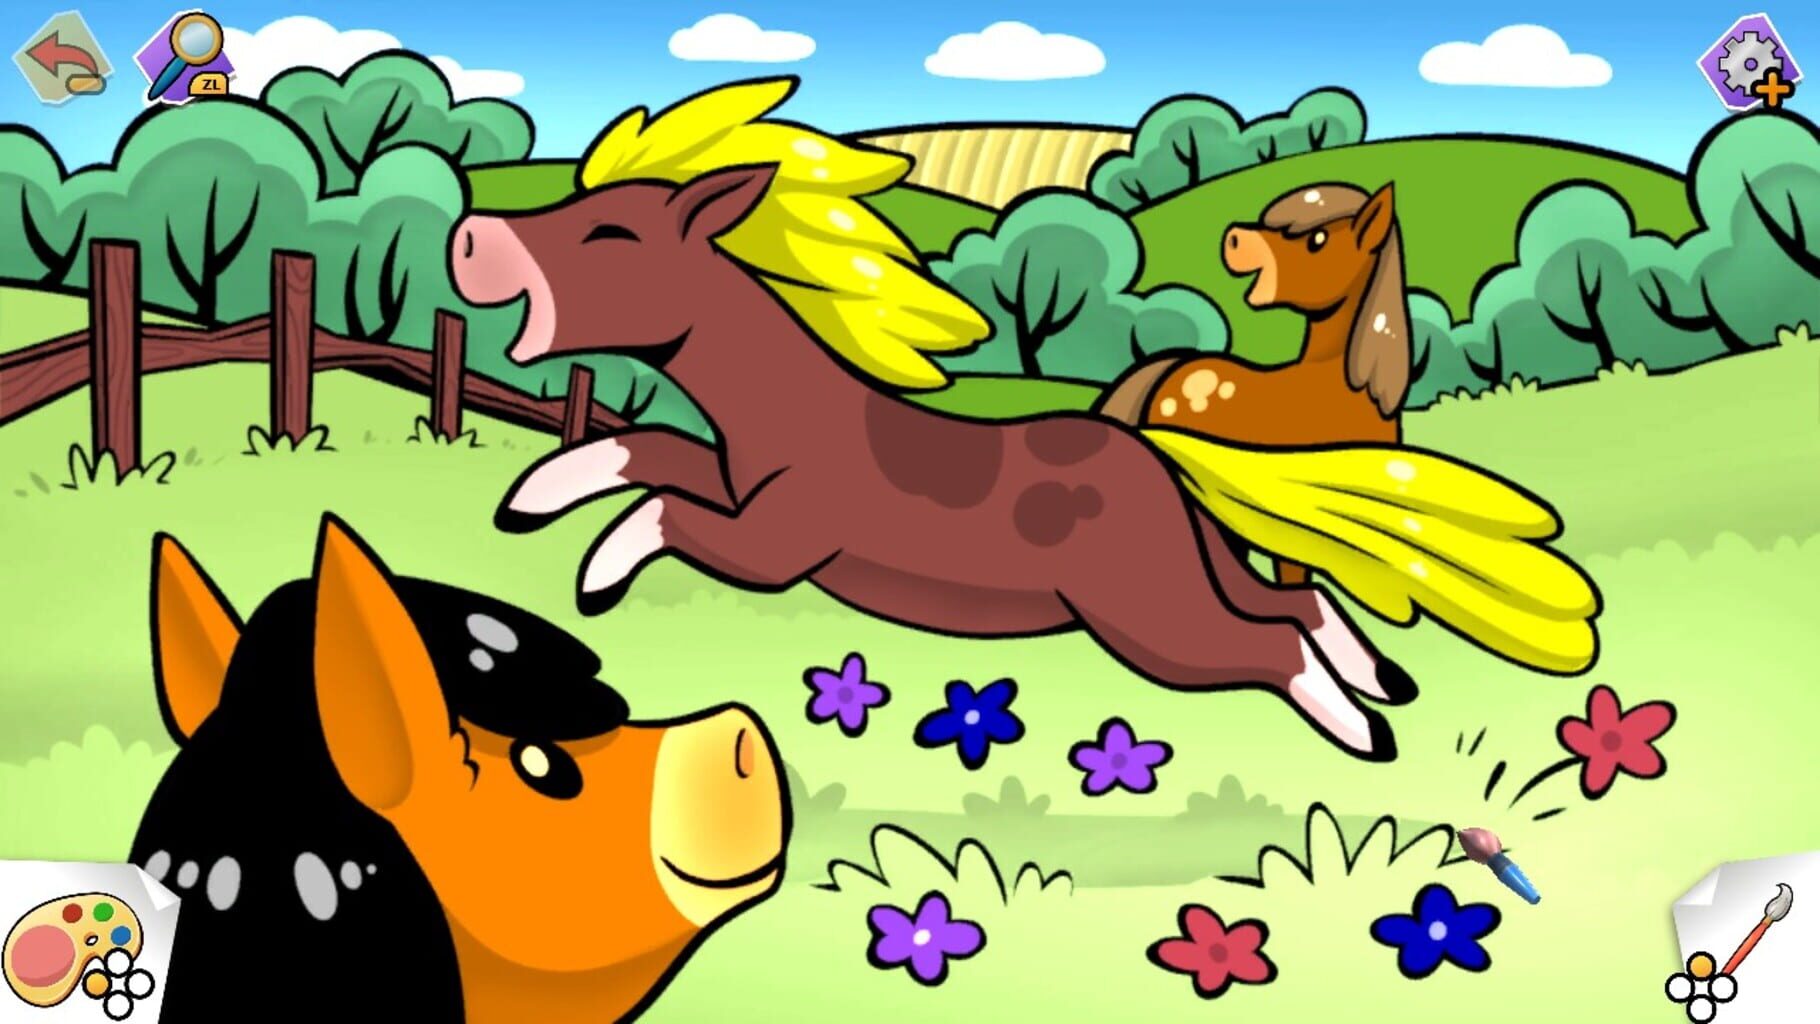 Coloring Book: Farm Life screenshot